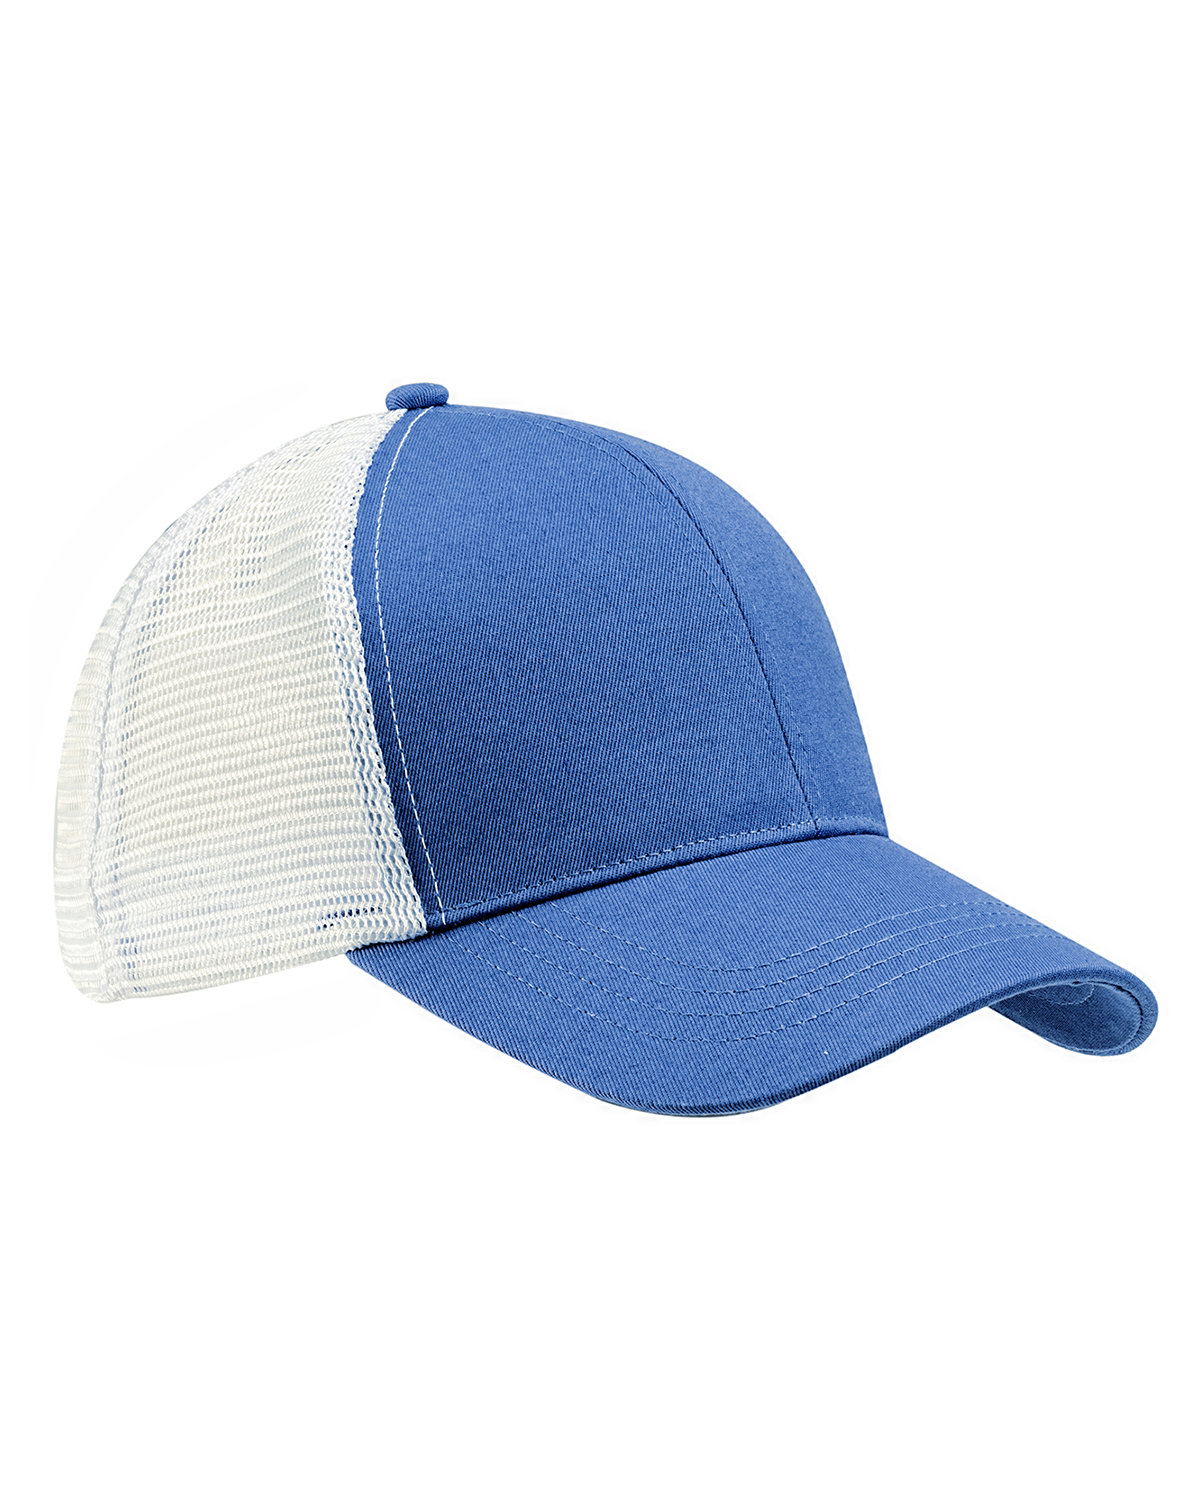 econscious Eco Trucker Hat daylght blu/ wht 